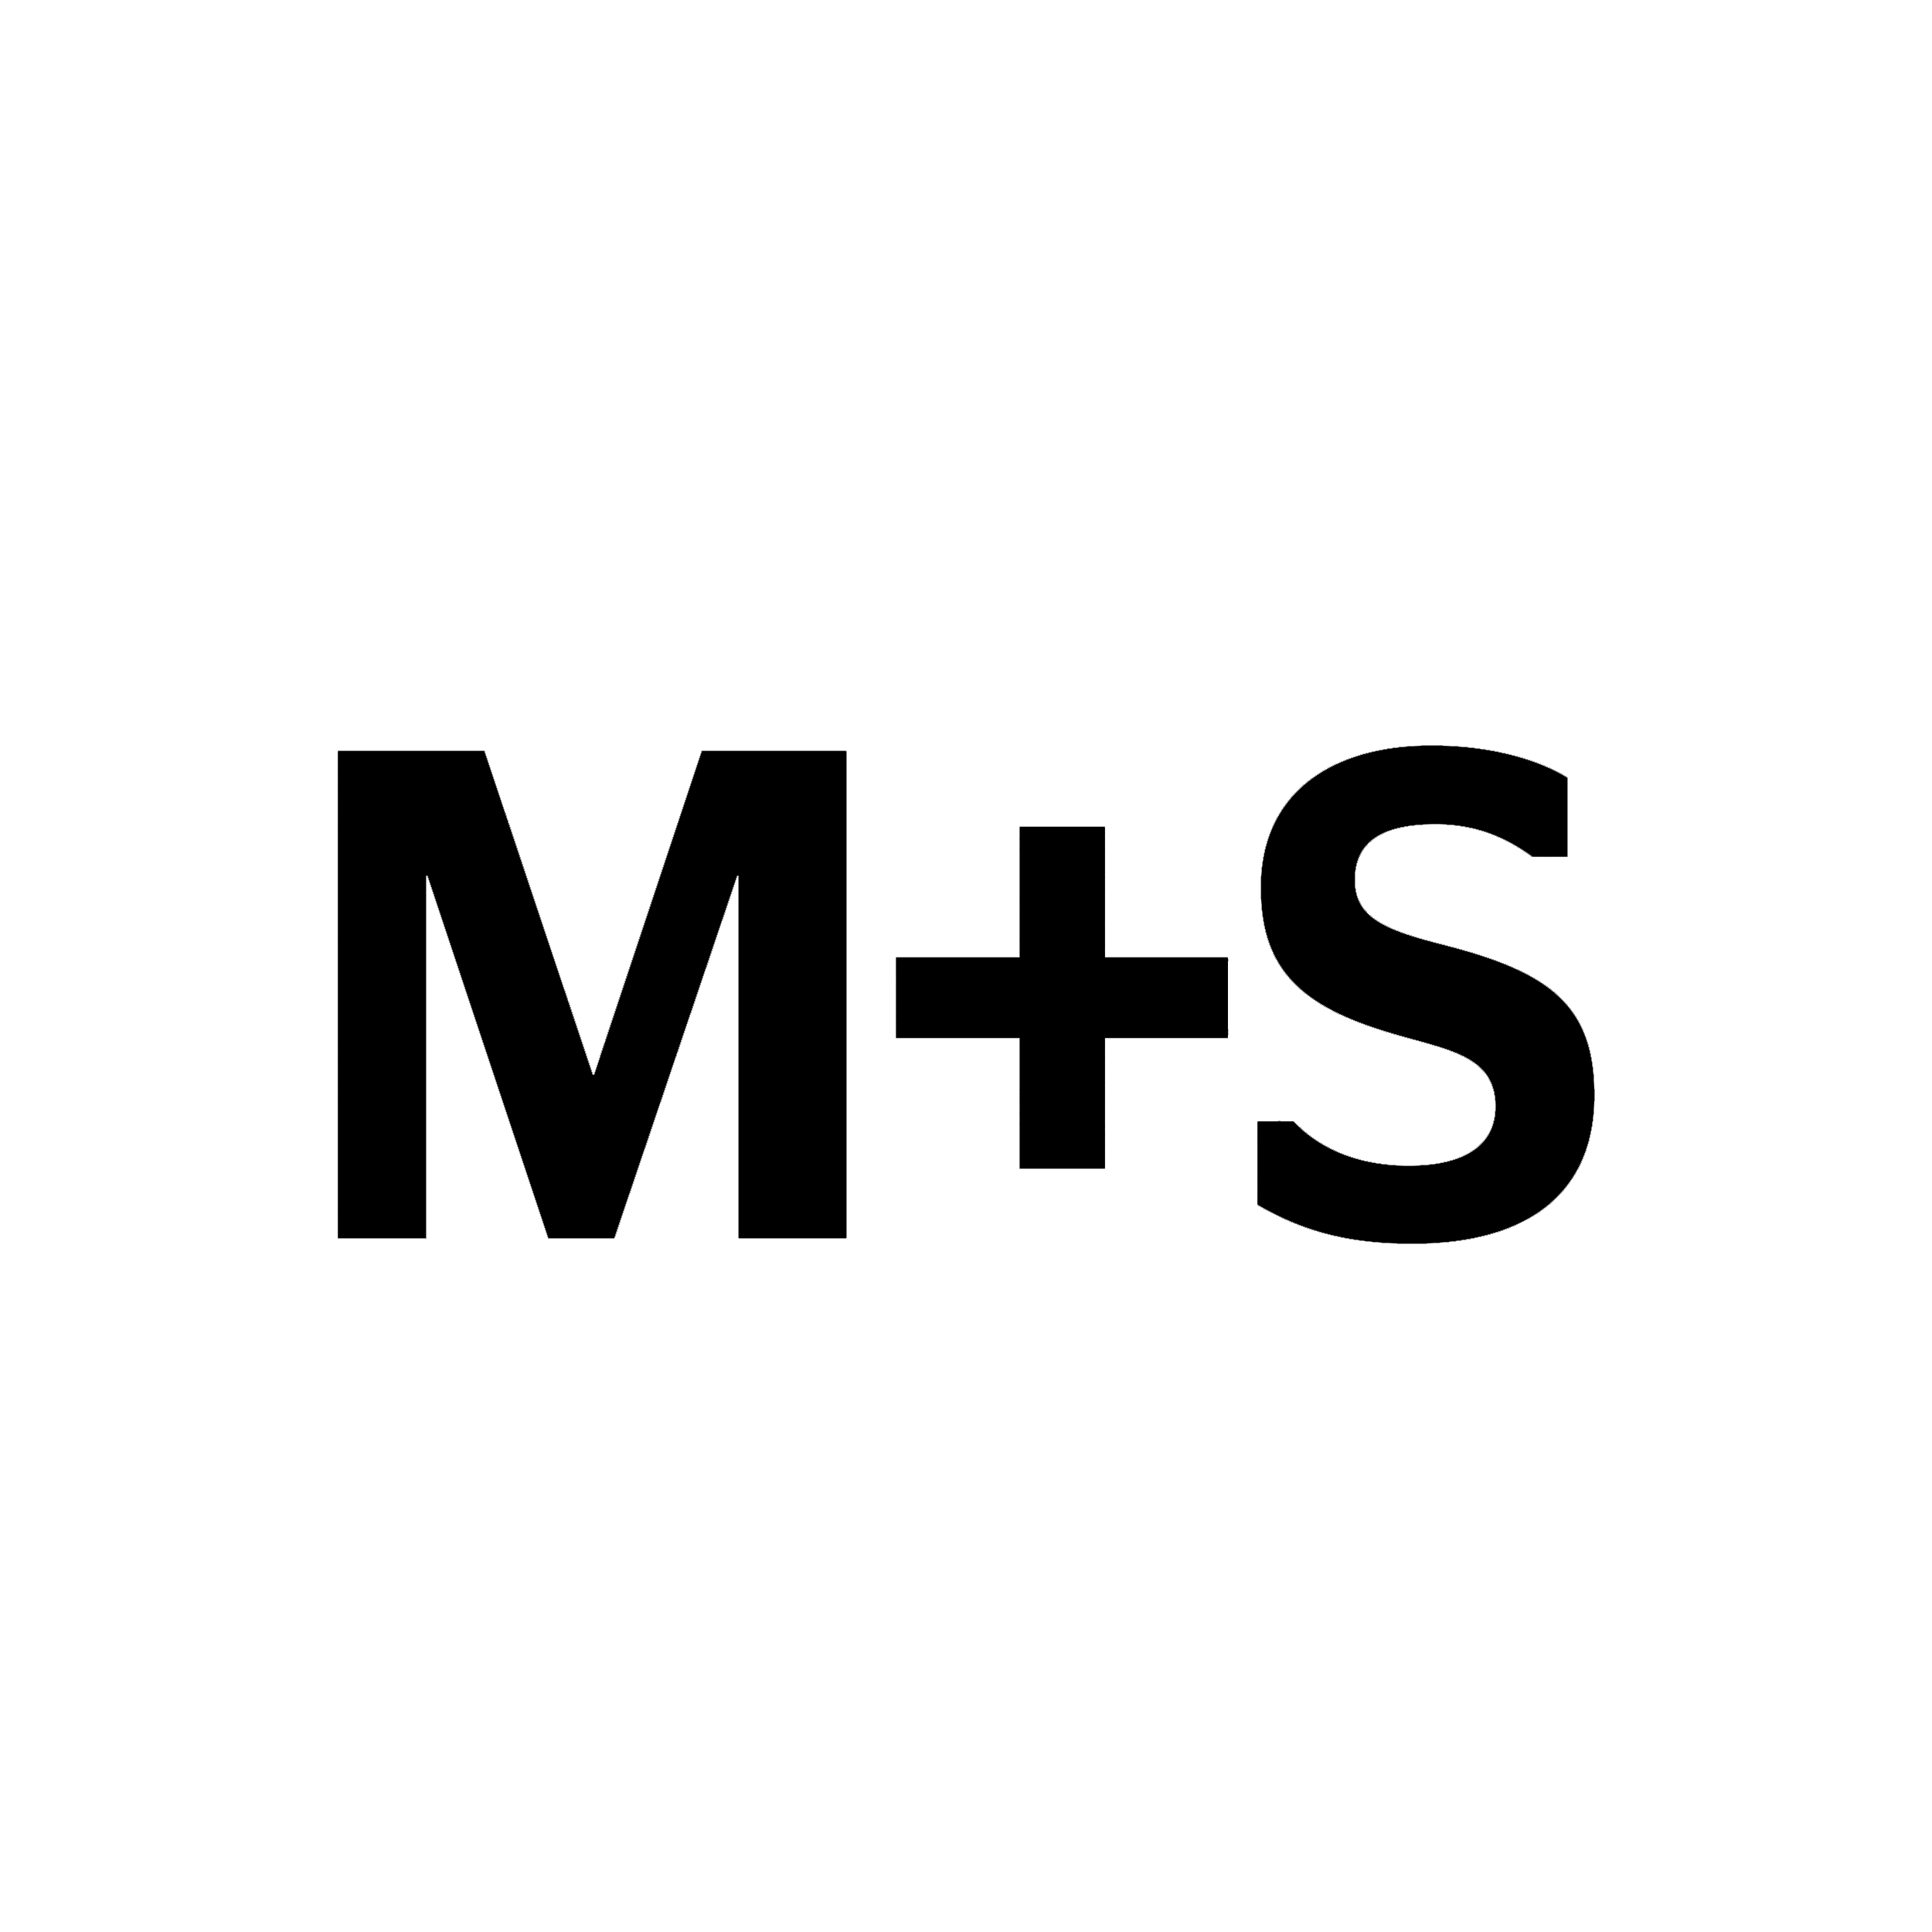 M+S marking illustration